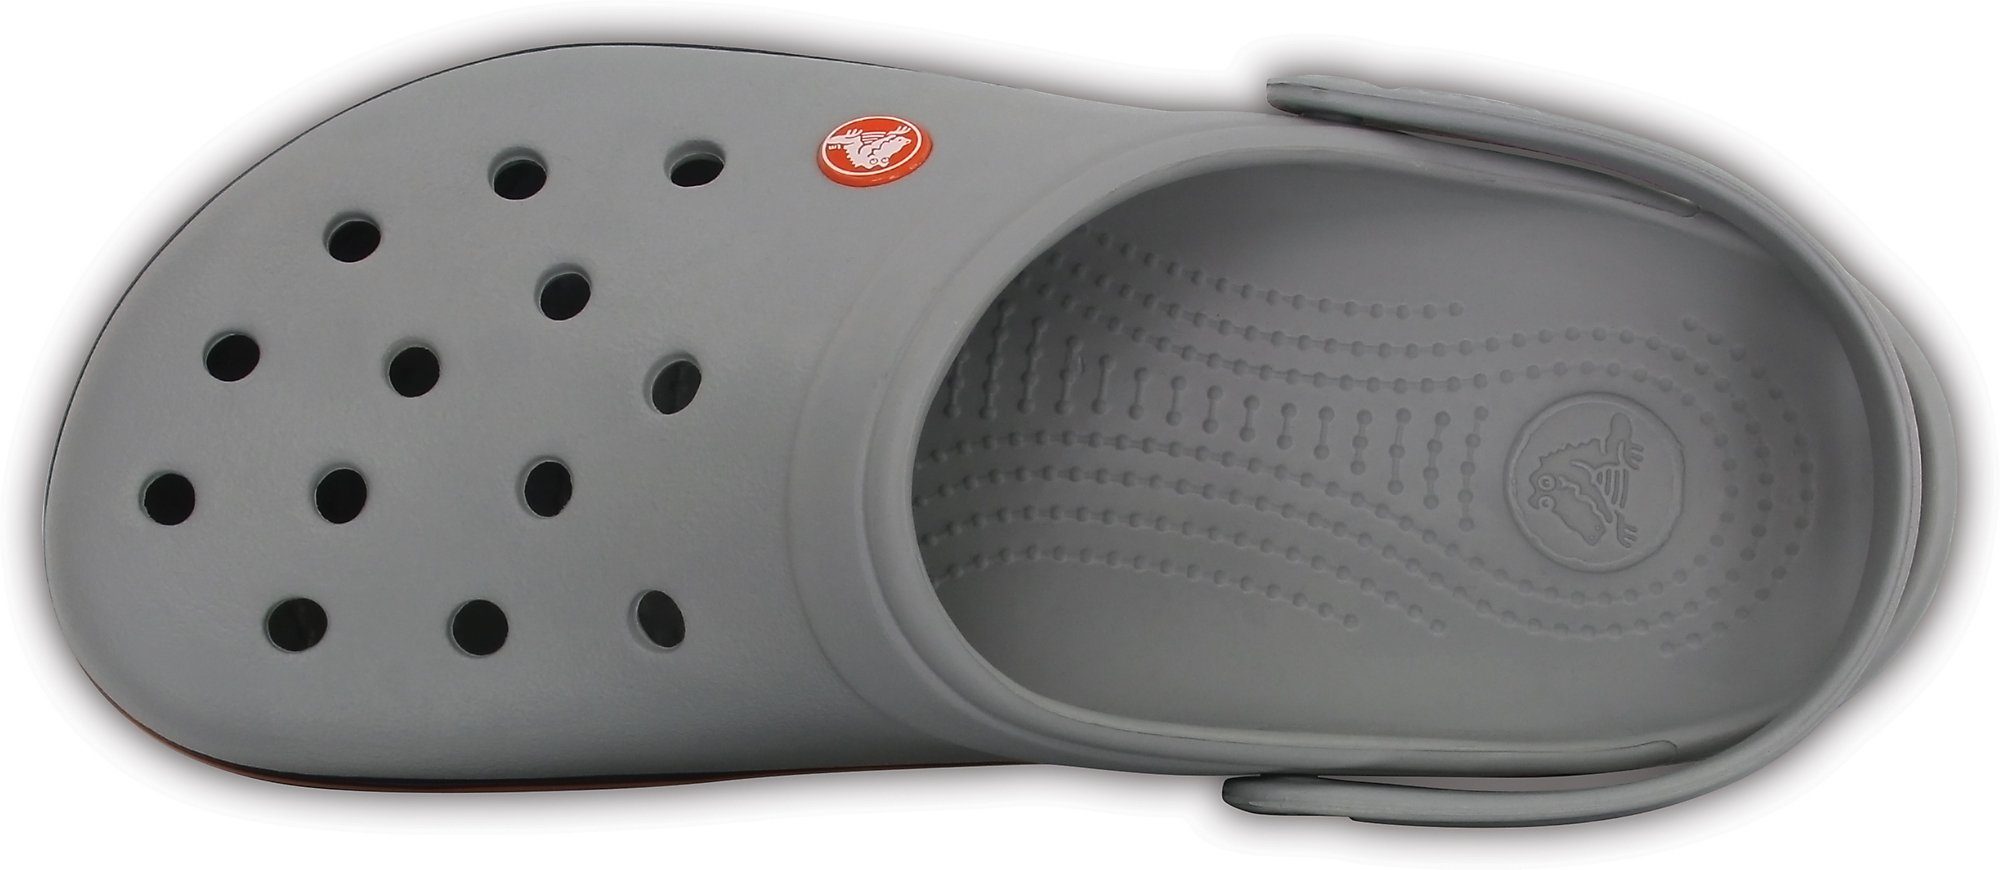 Crocs Crocband Clog mit farbiger grau-schwarz-orange Laufsohle